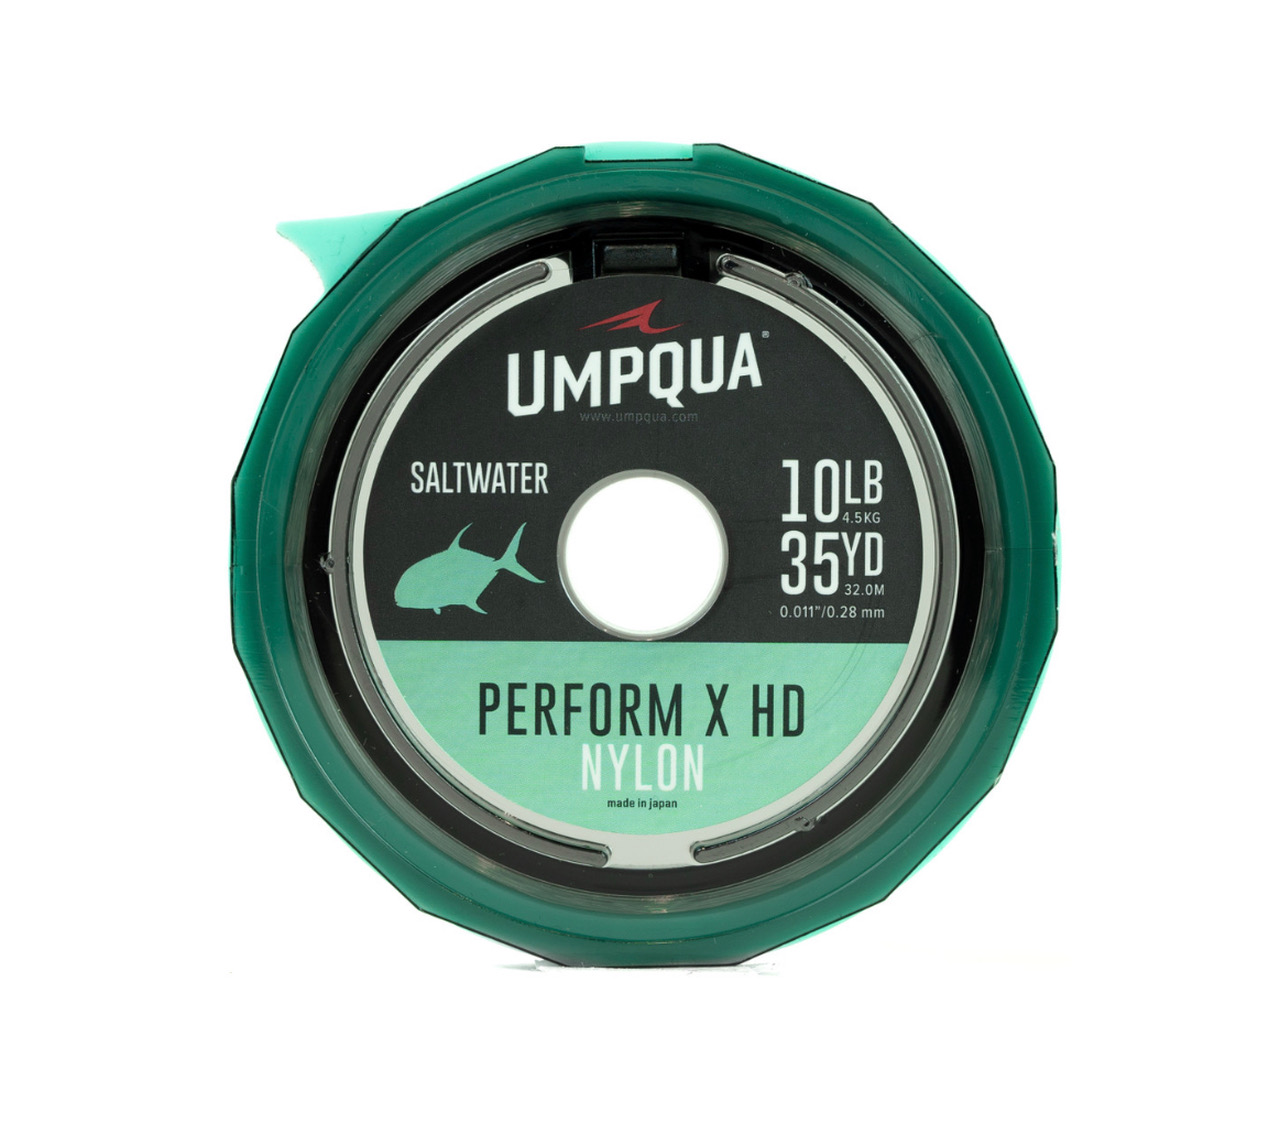 Umpqua Perform X HD Saltwater Nylon Tippet - 35yd - 16lb